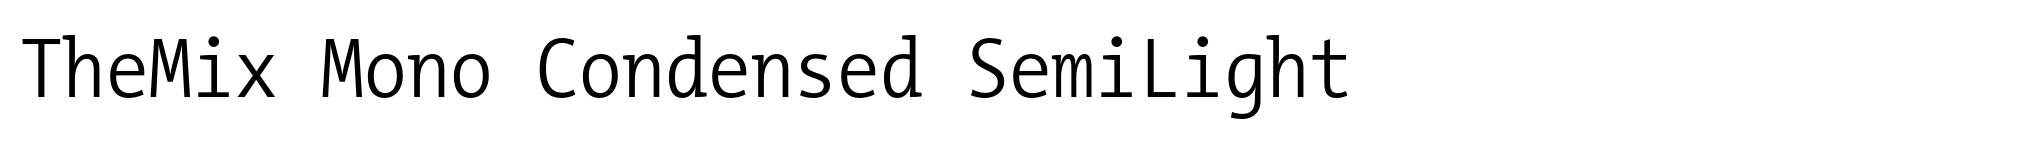 TheMix Mono Condensed SemiLight image